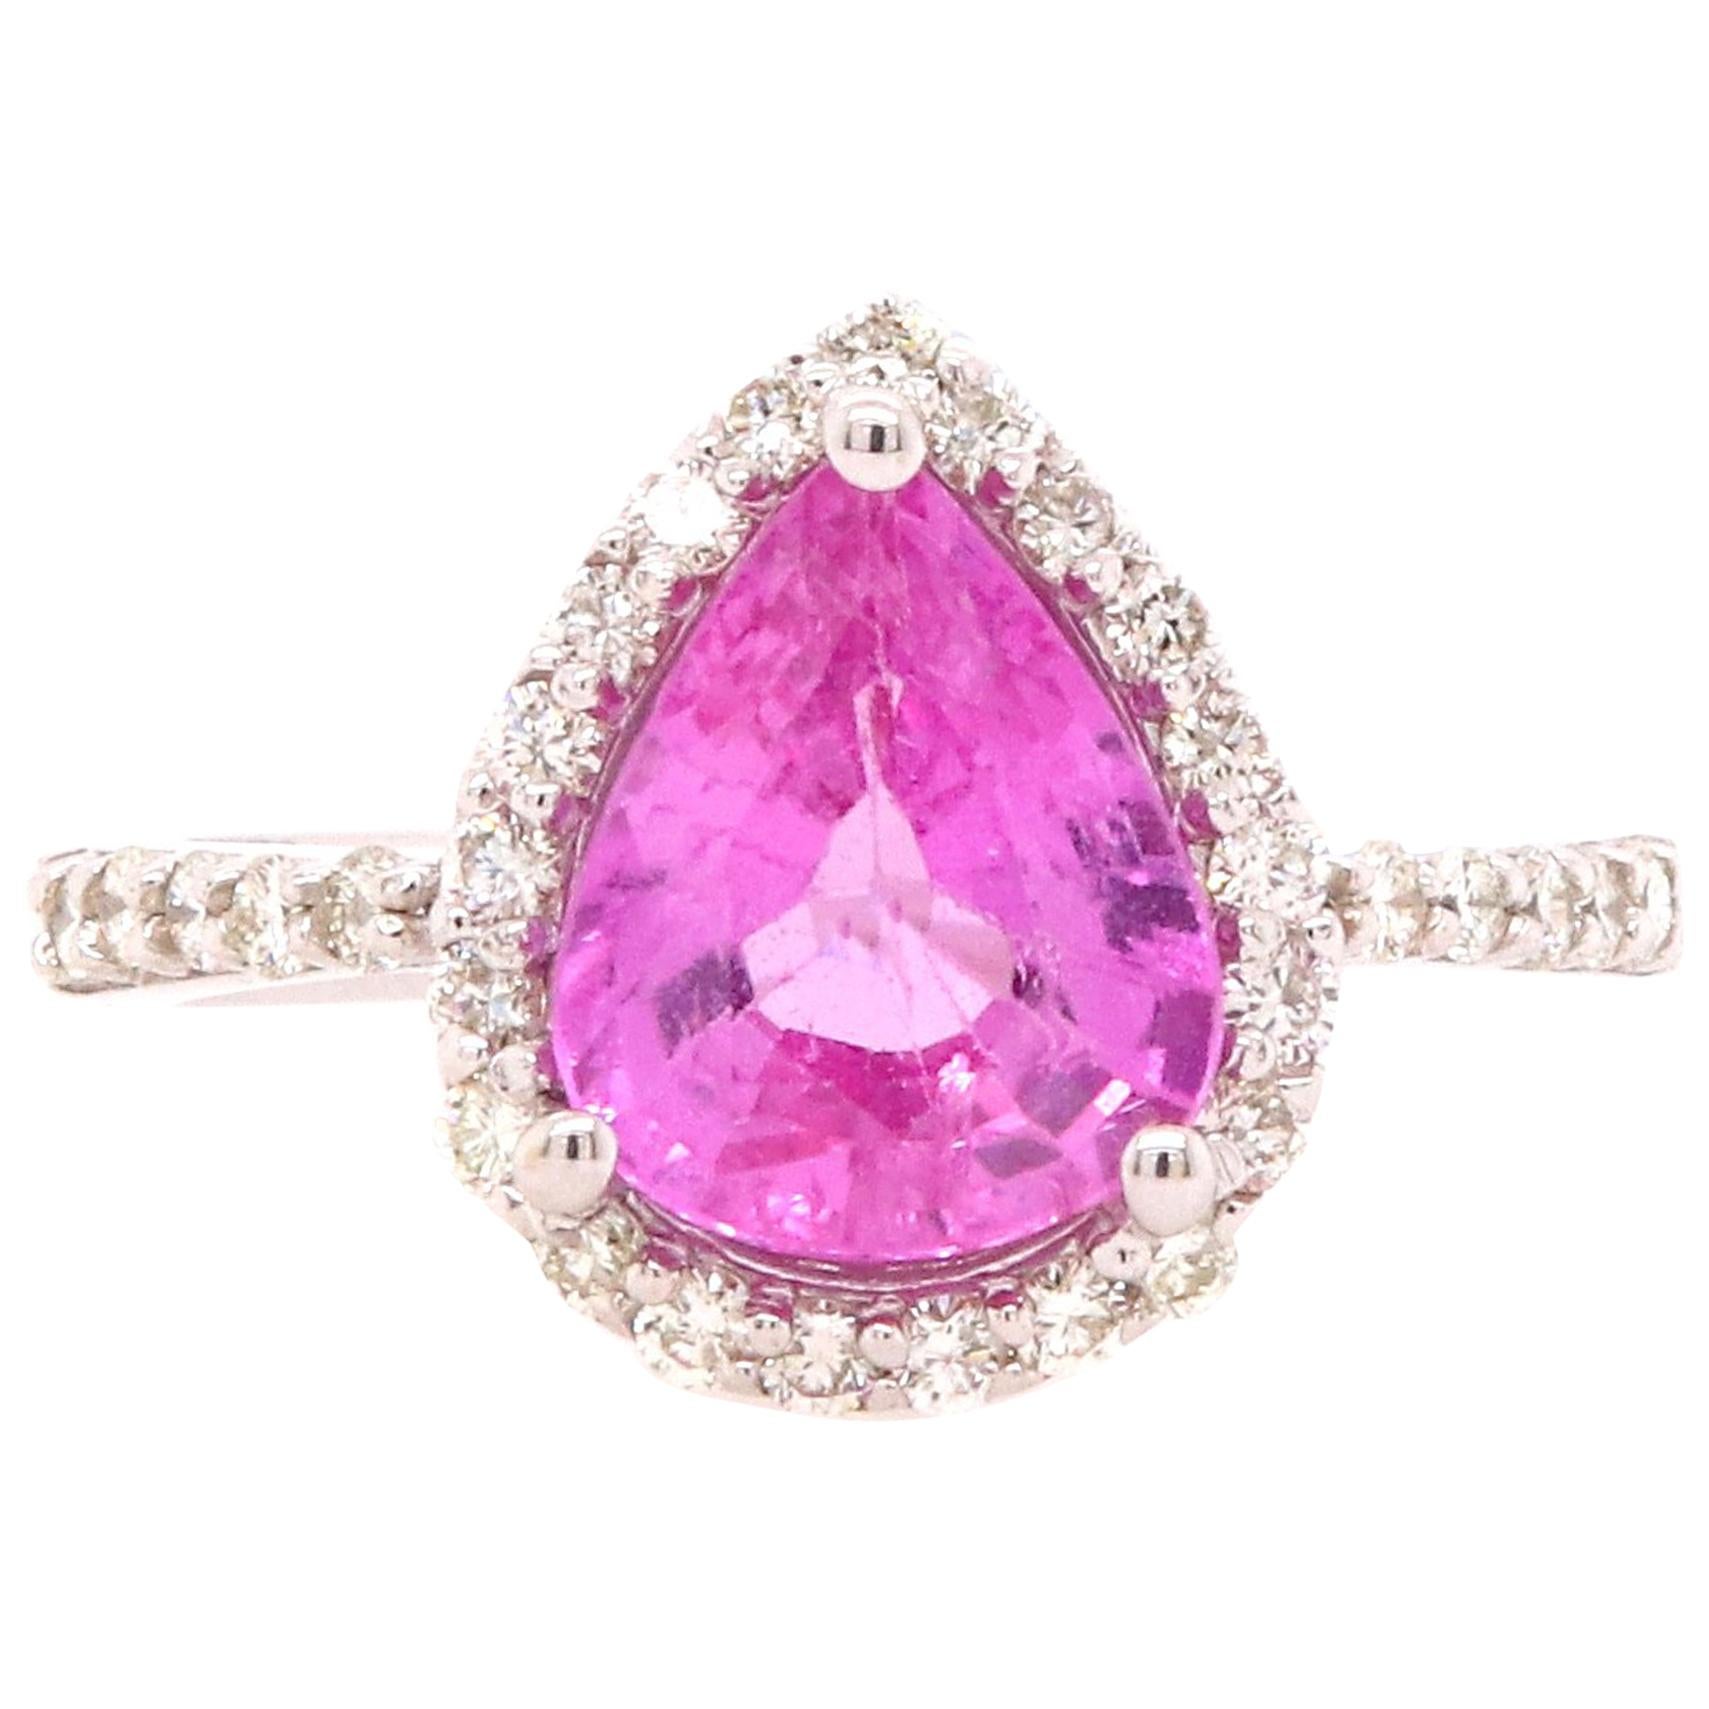 2.5 Carat Pink Sapphire and Diamond Ring